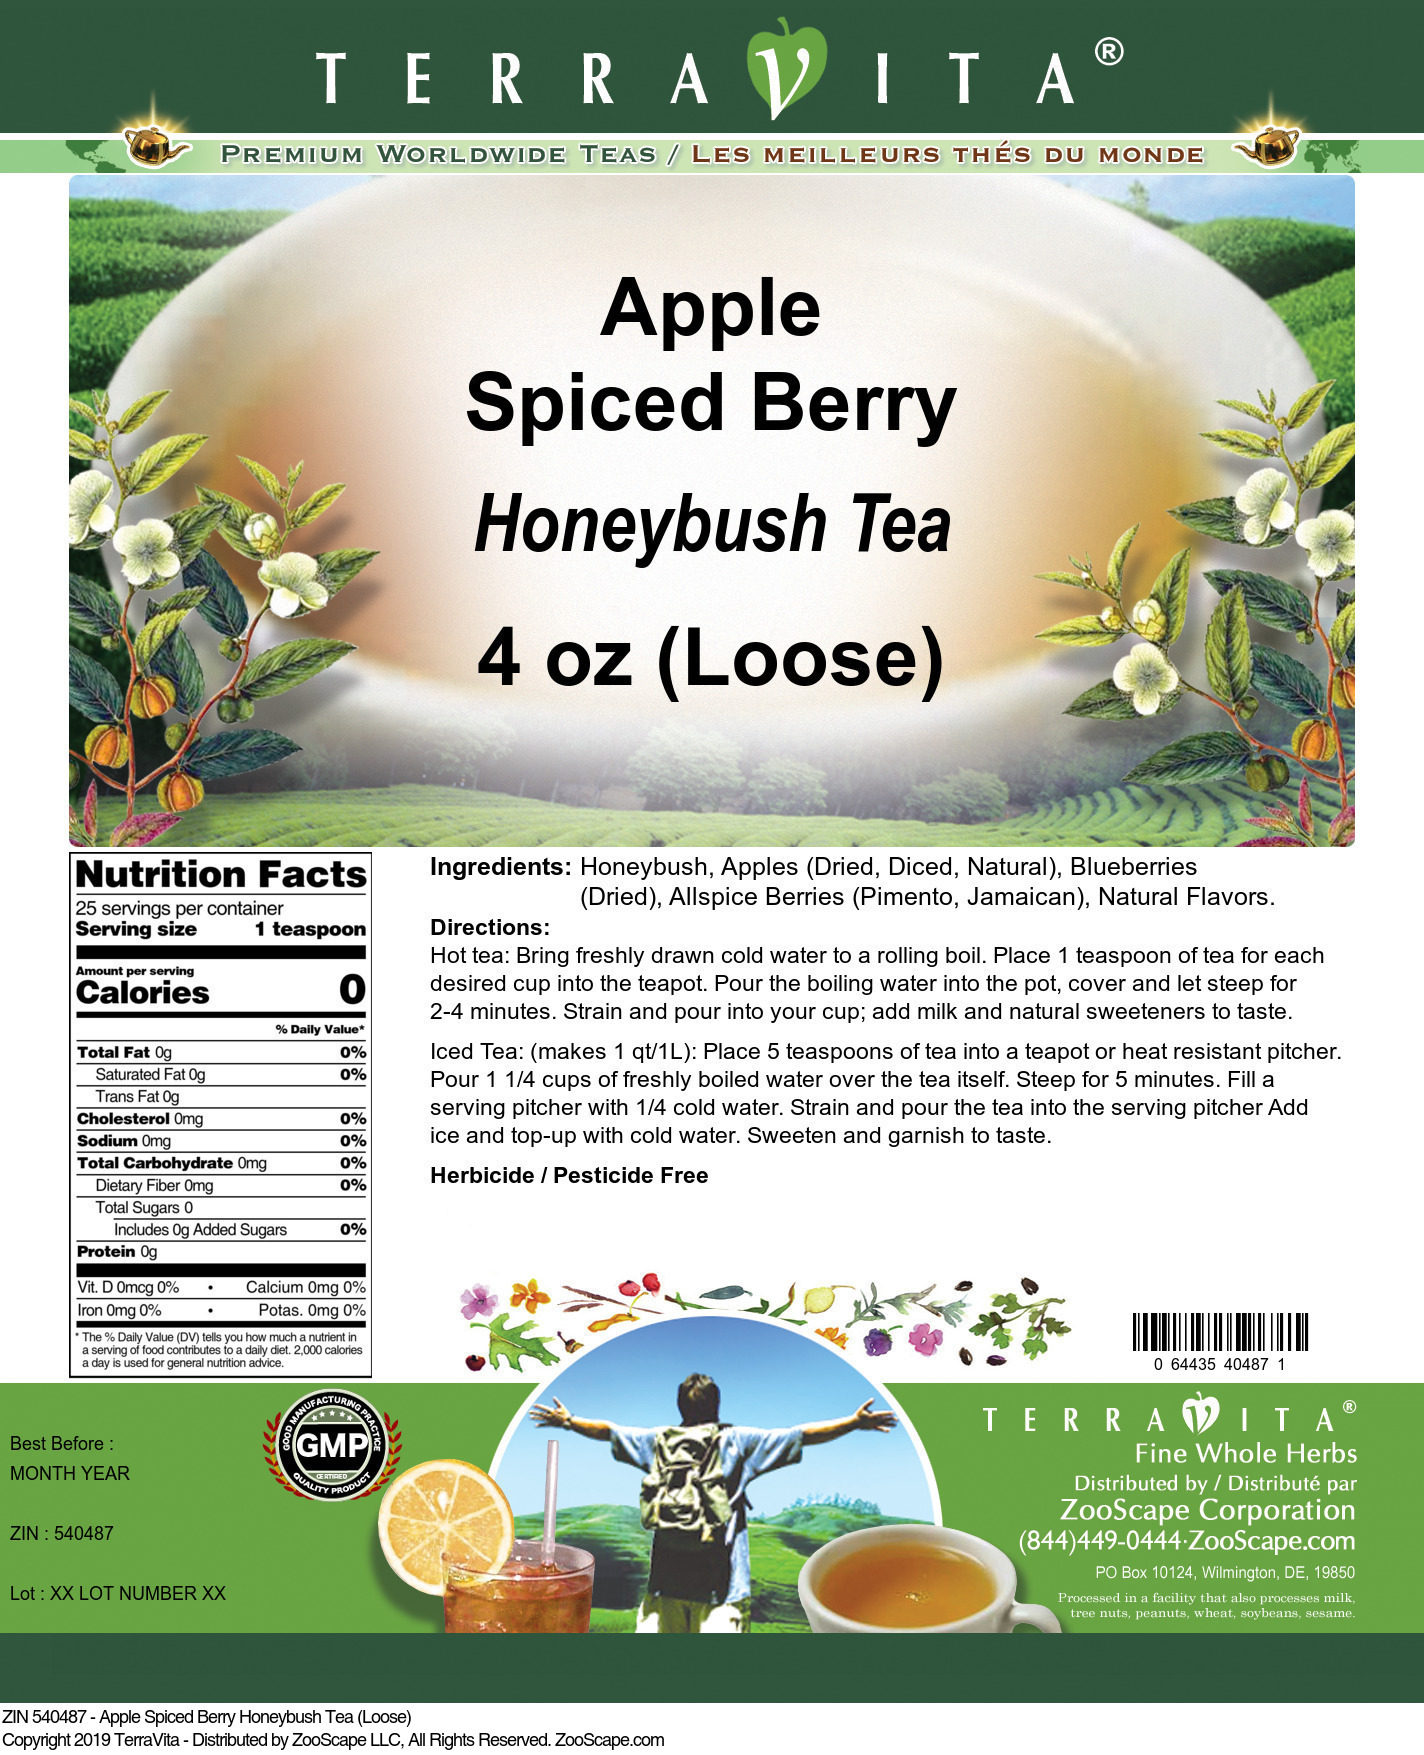 Apple Spiced Berry Honeybush Tea (Loose) - Label